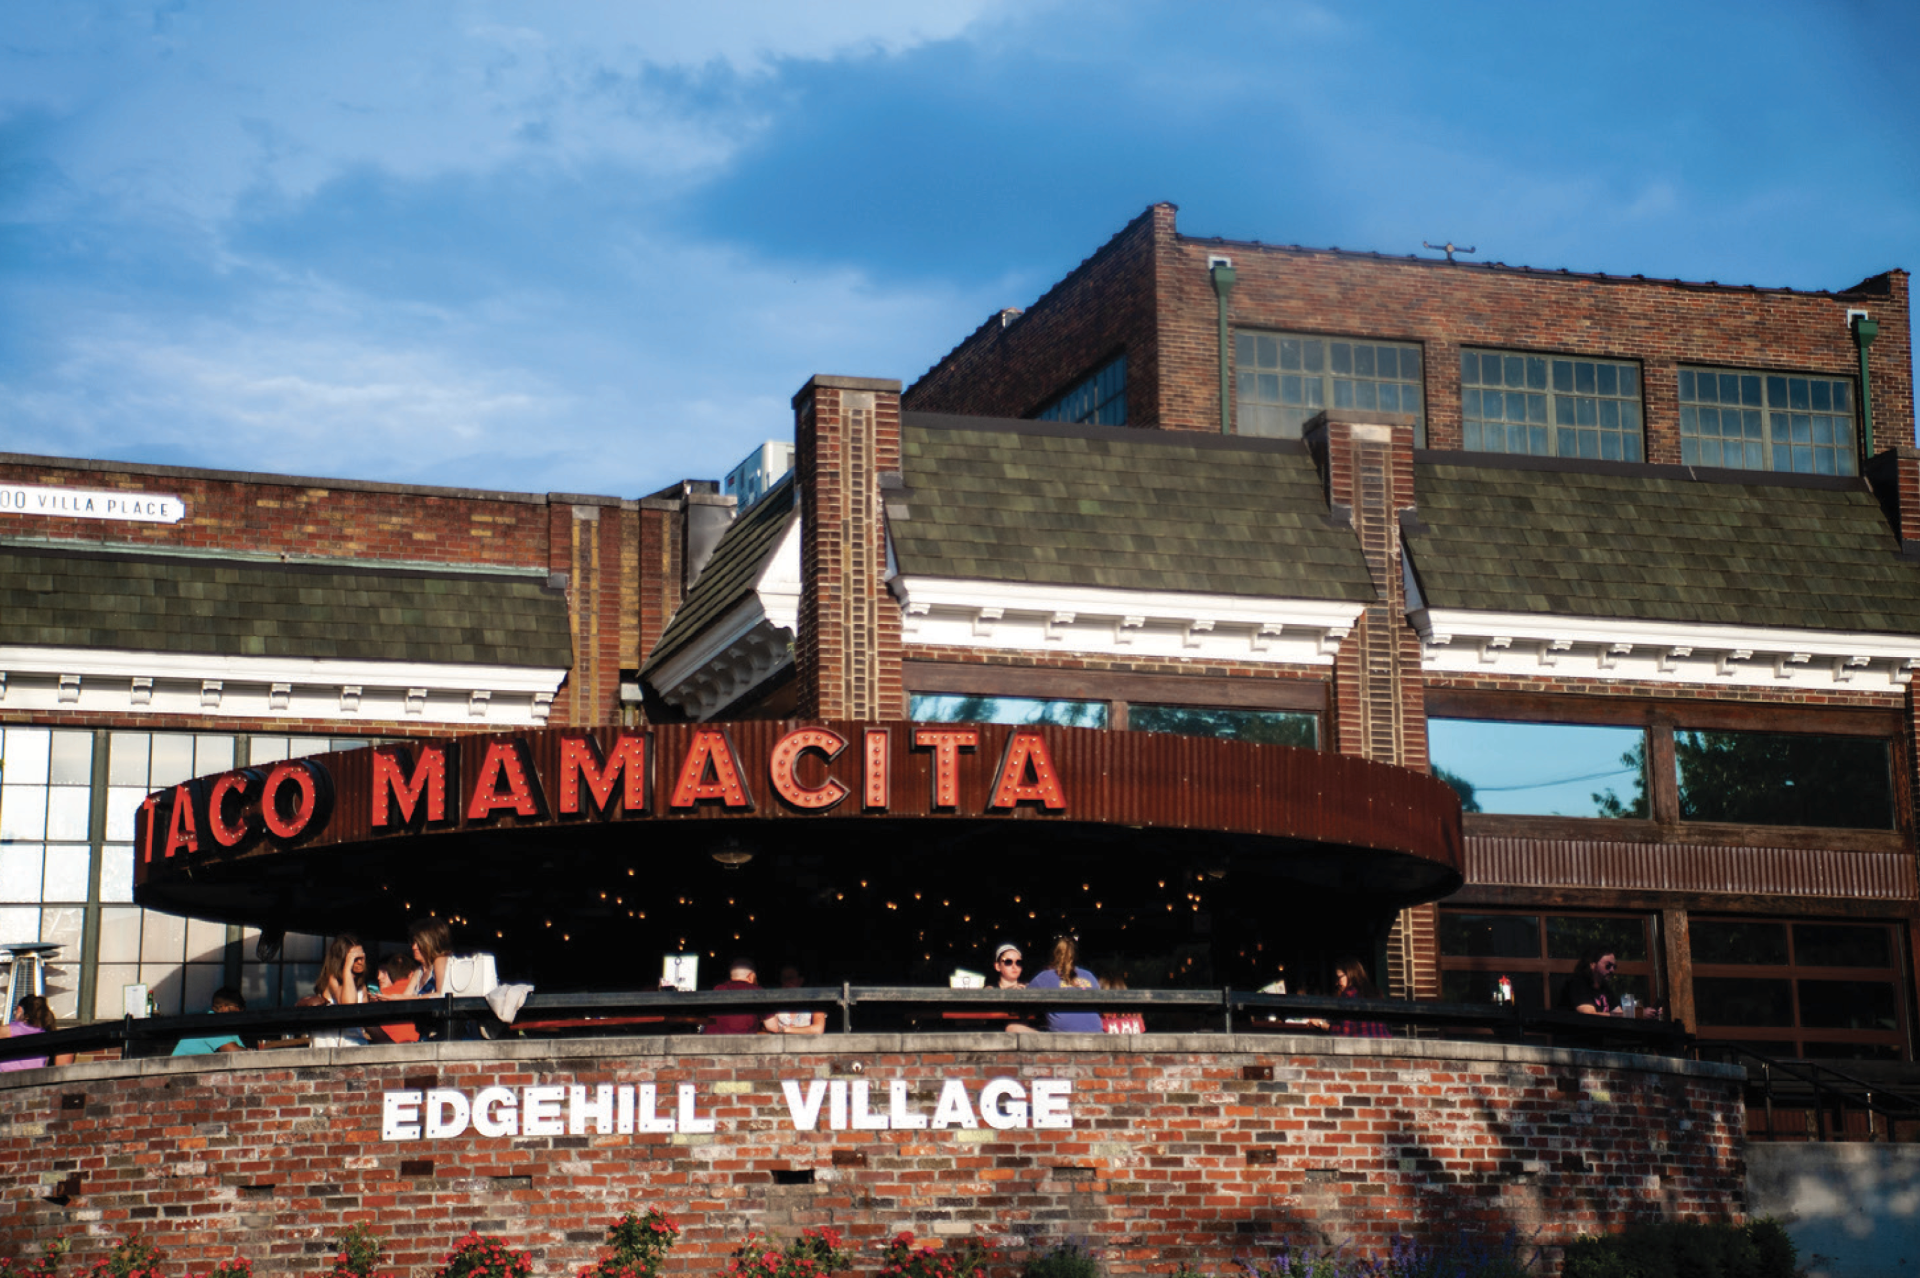 Taco Mamacita restaurant in Edgehill Village, Nashville Tennessee